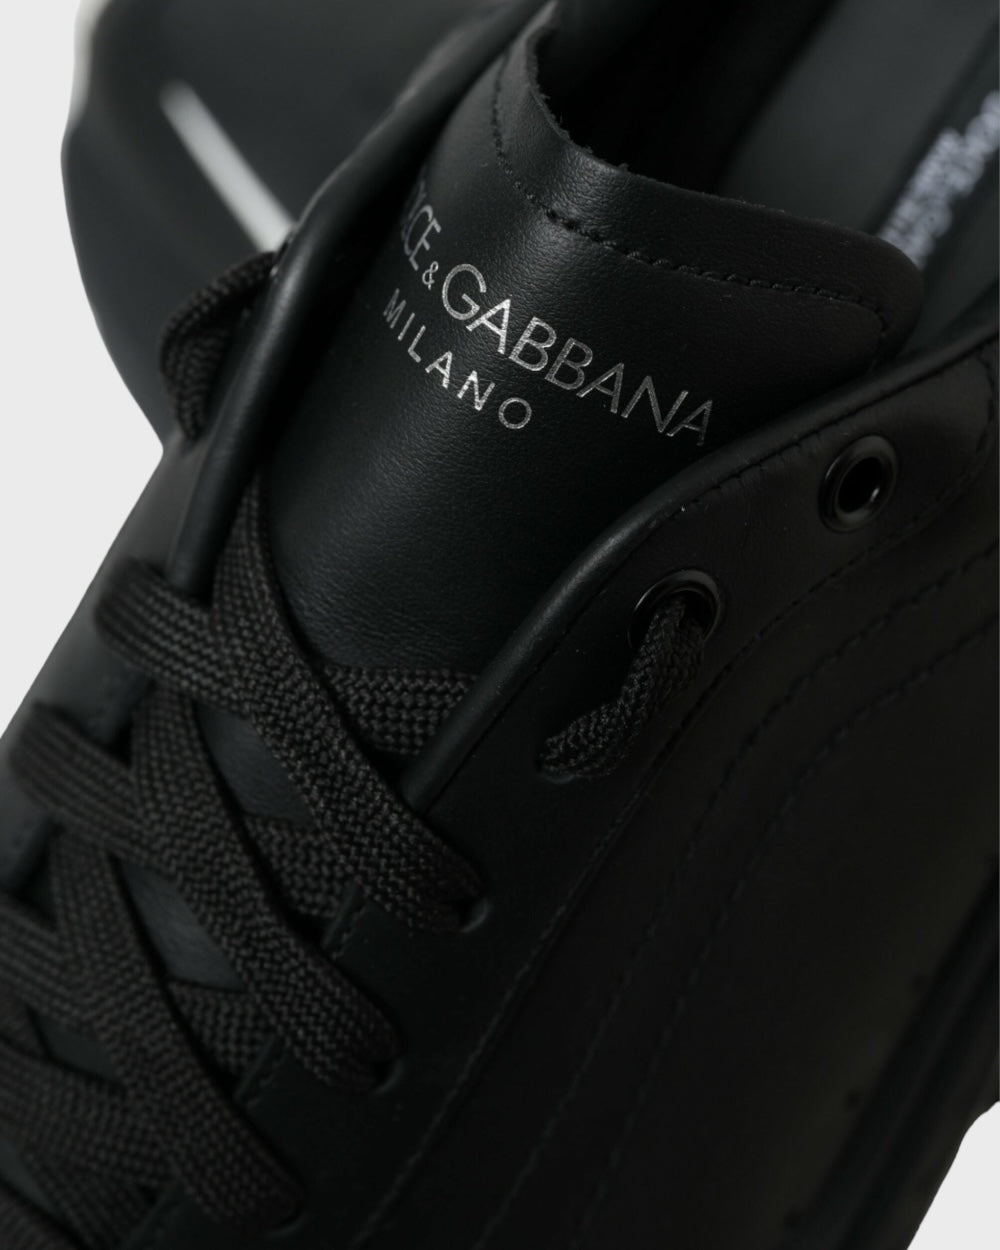 Dolce & Gabbana | Daymaster Elevated Zwart Sneakers